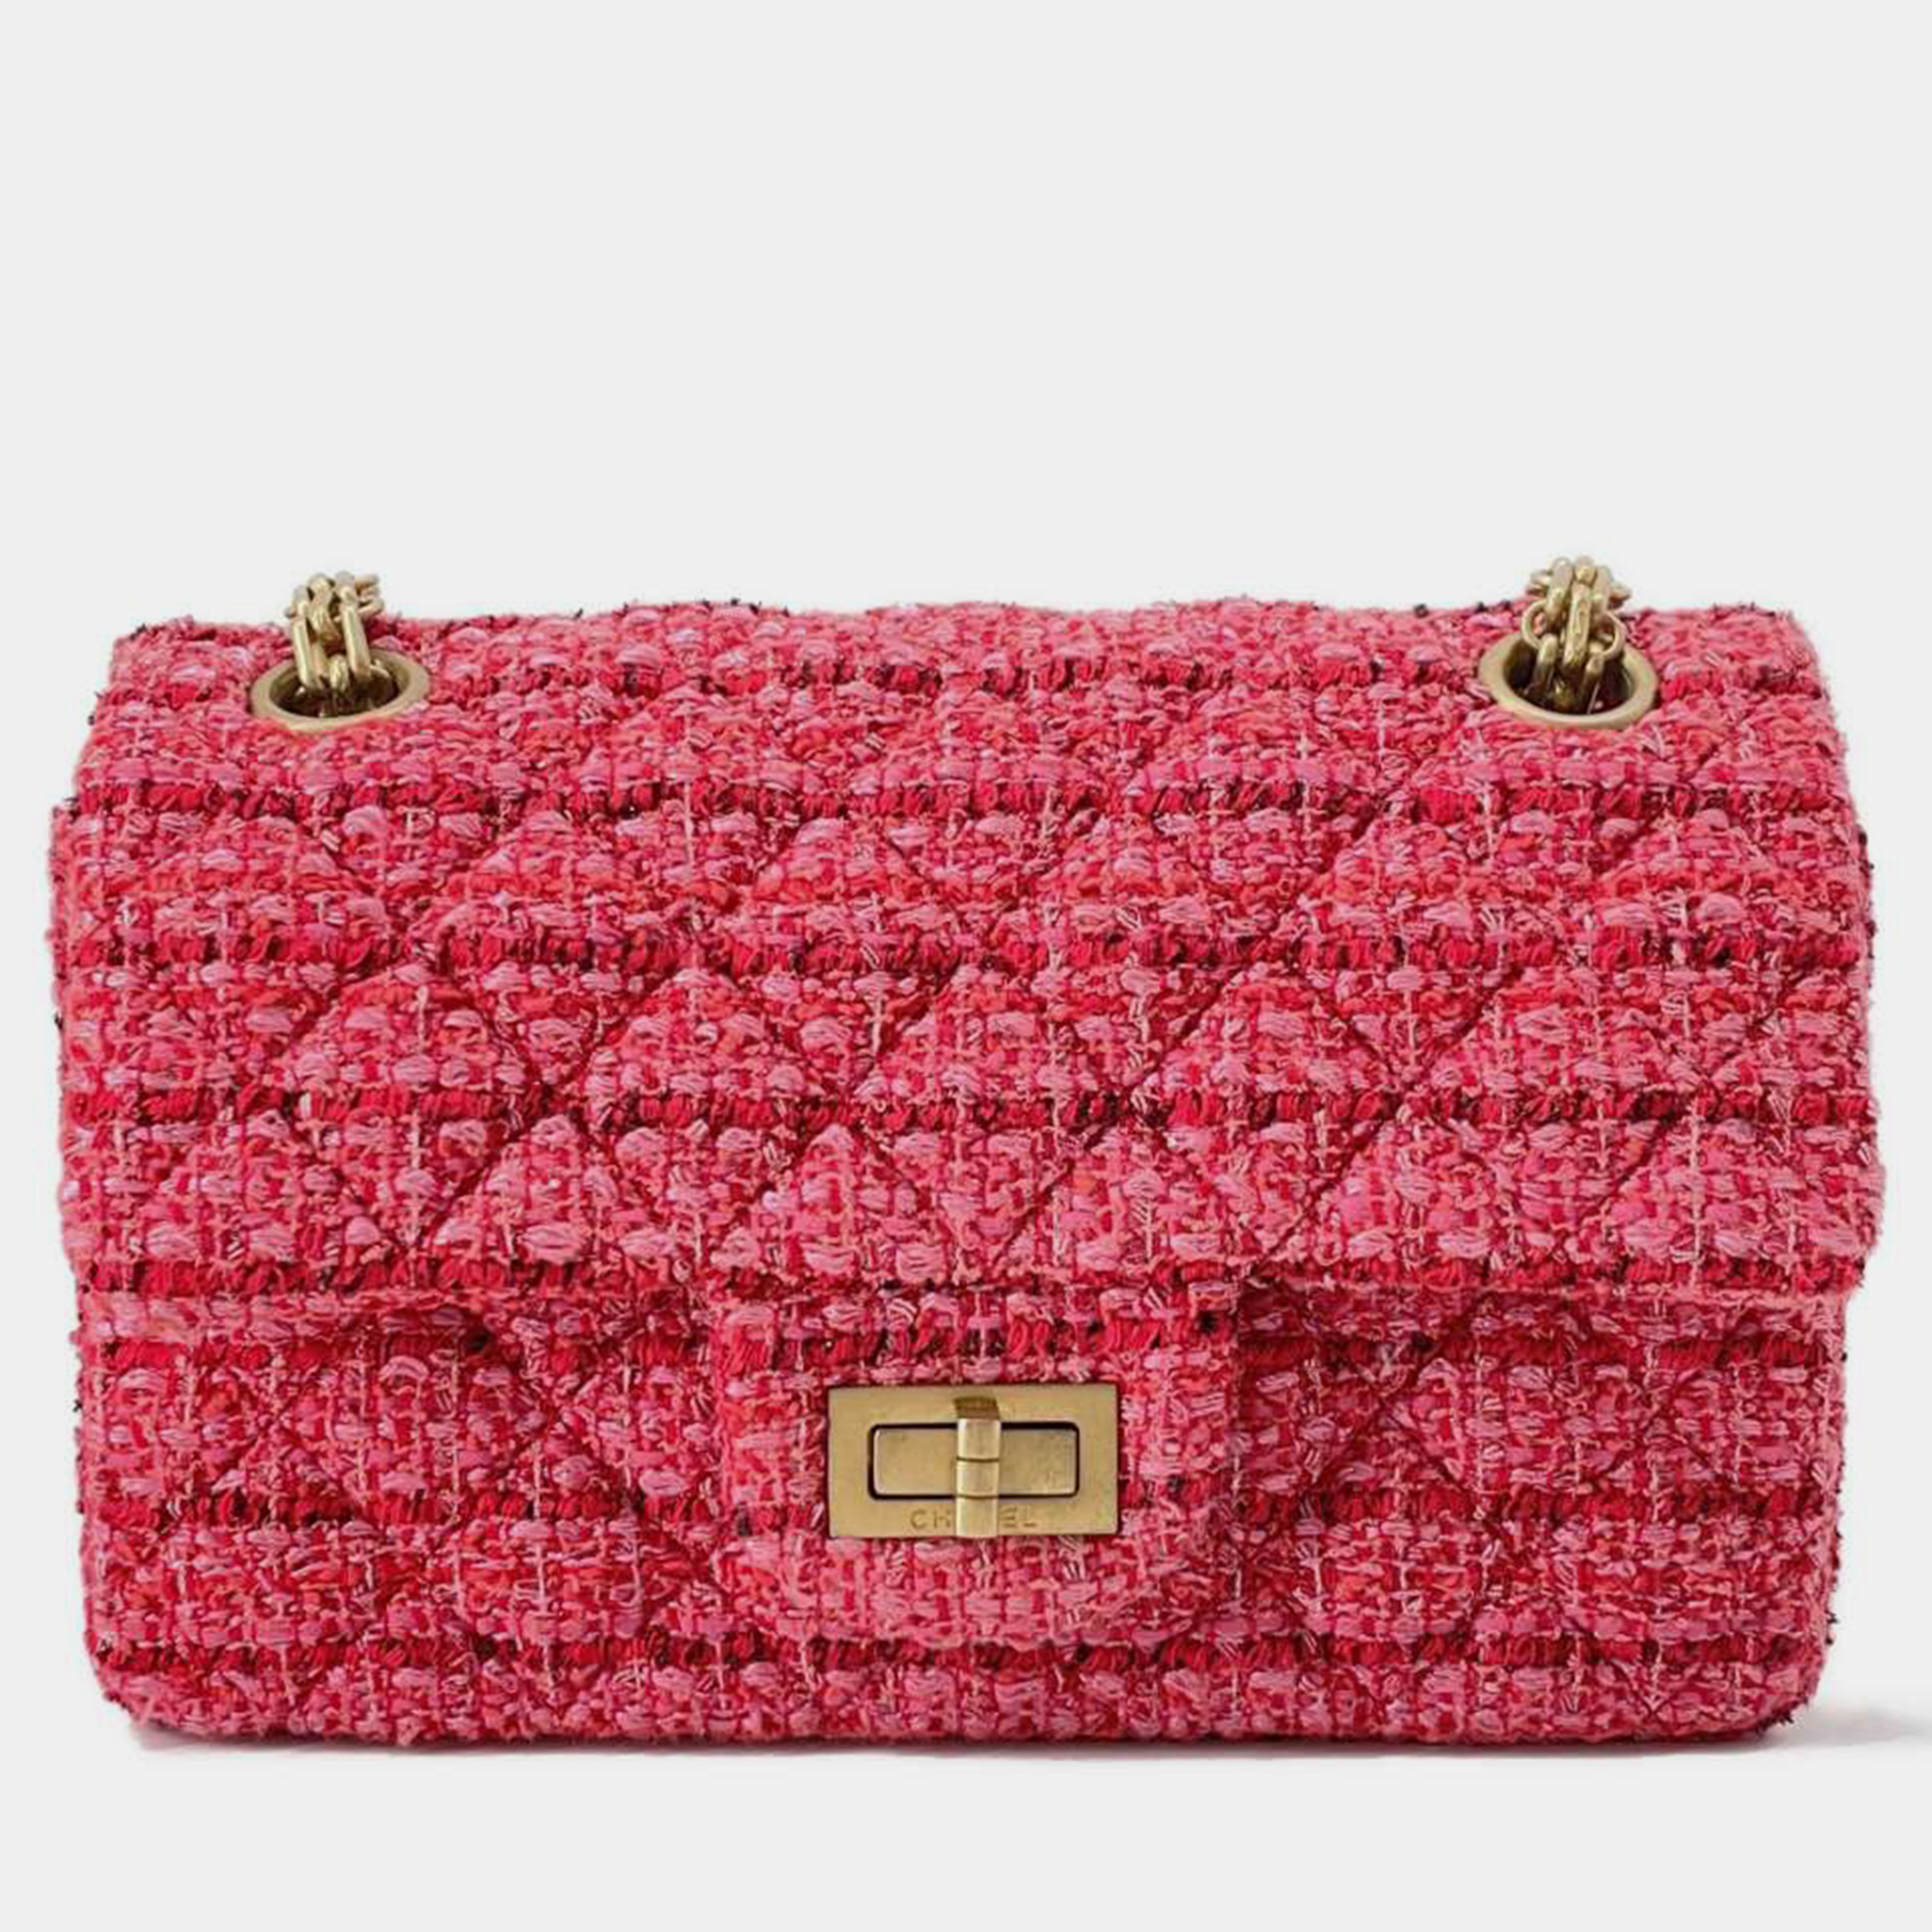 Chanel red tweed mini flap bag